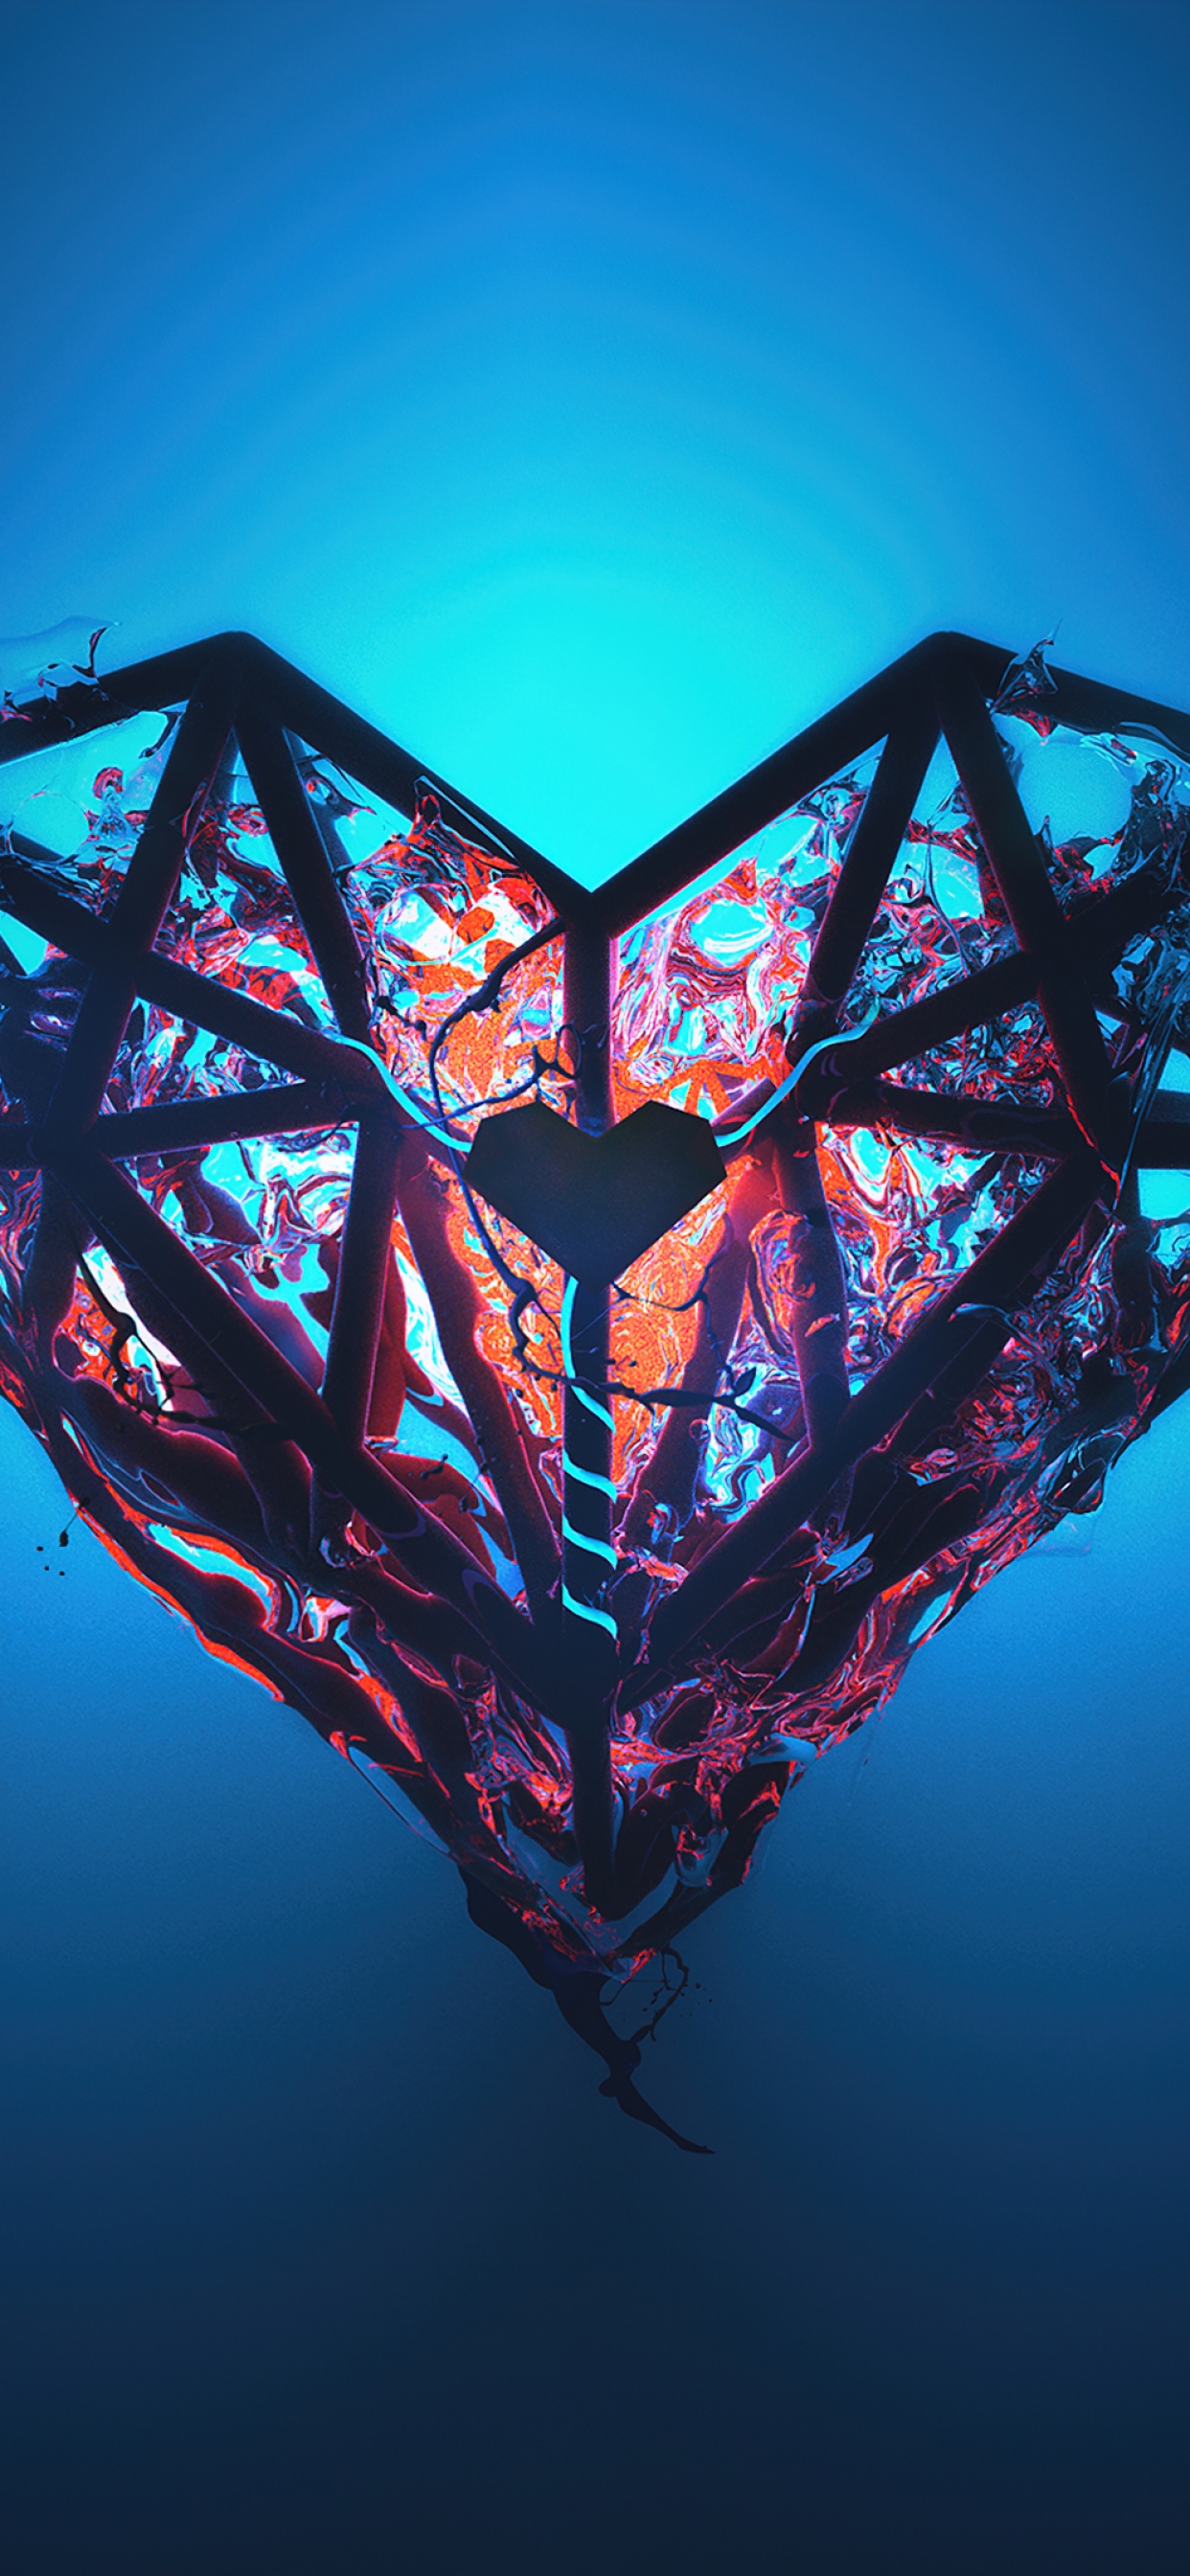 Heart Wallpaper 4K, Low poly, Artwork, Glow, Blue background, beat